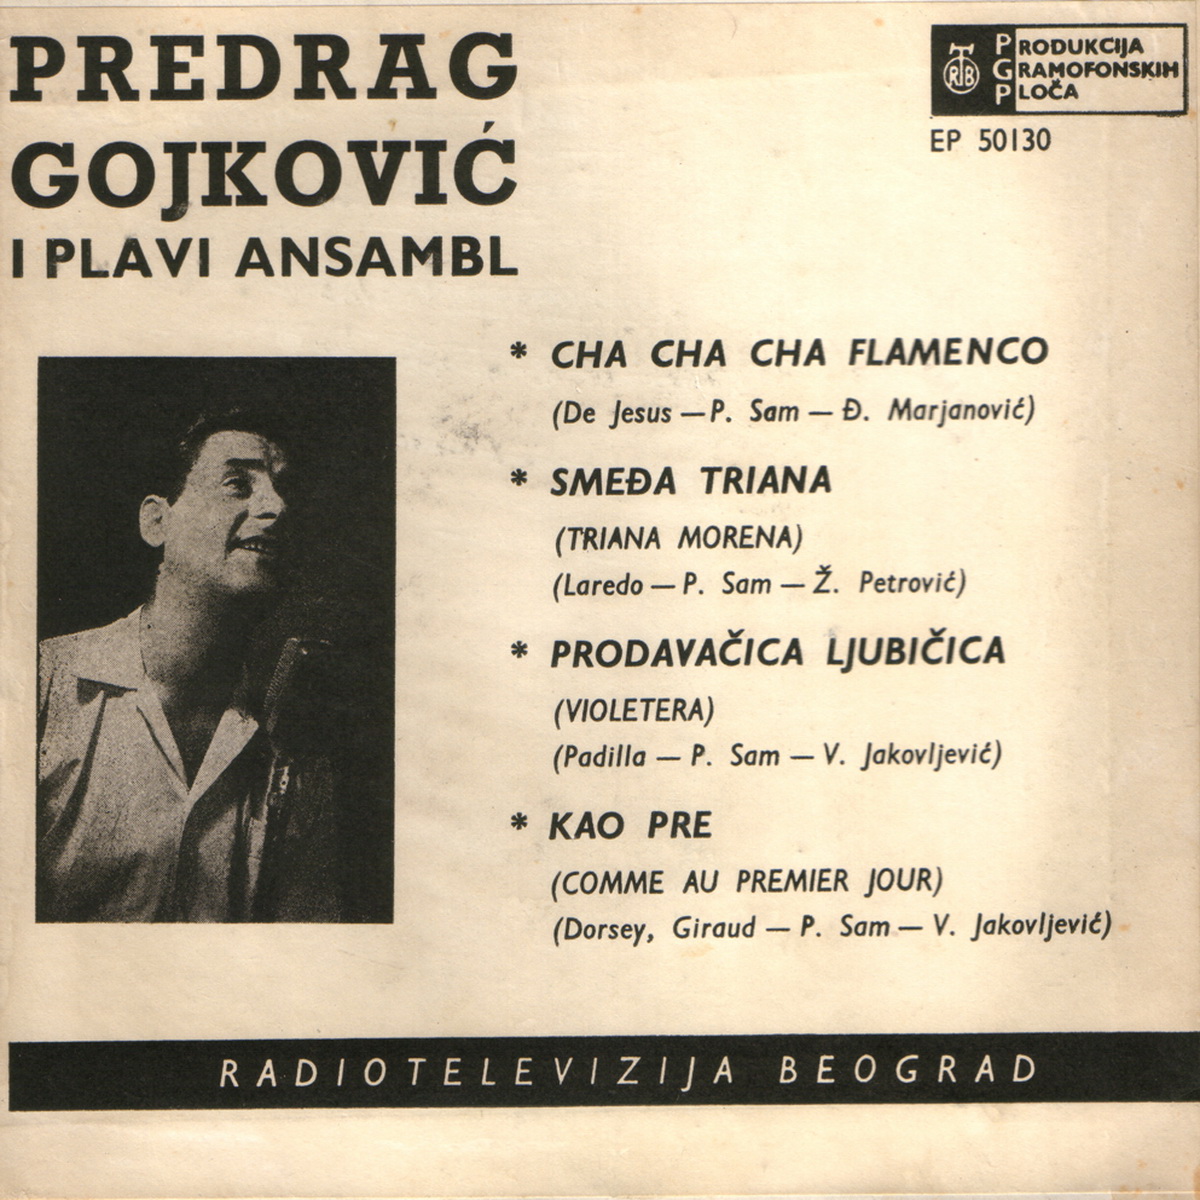 Predrag Gojkovic 1963 Cha cha cha flamenco b